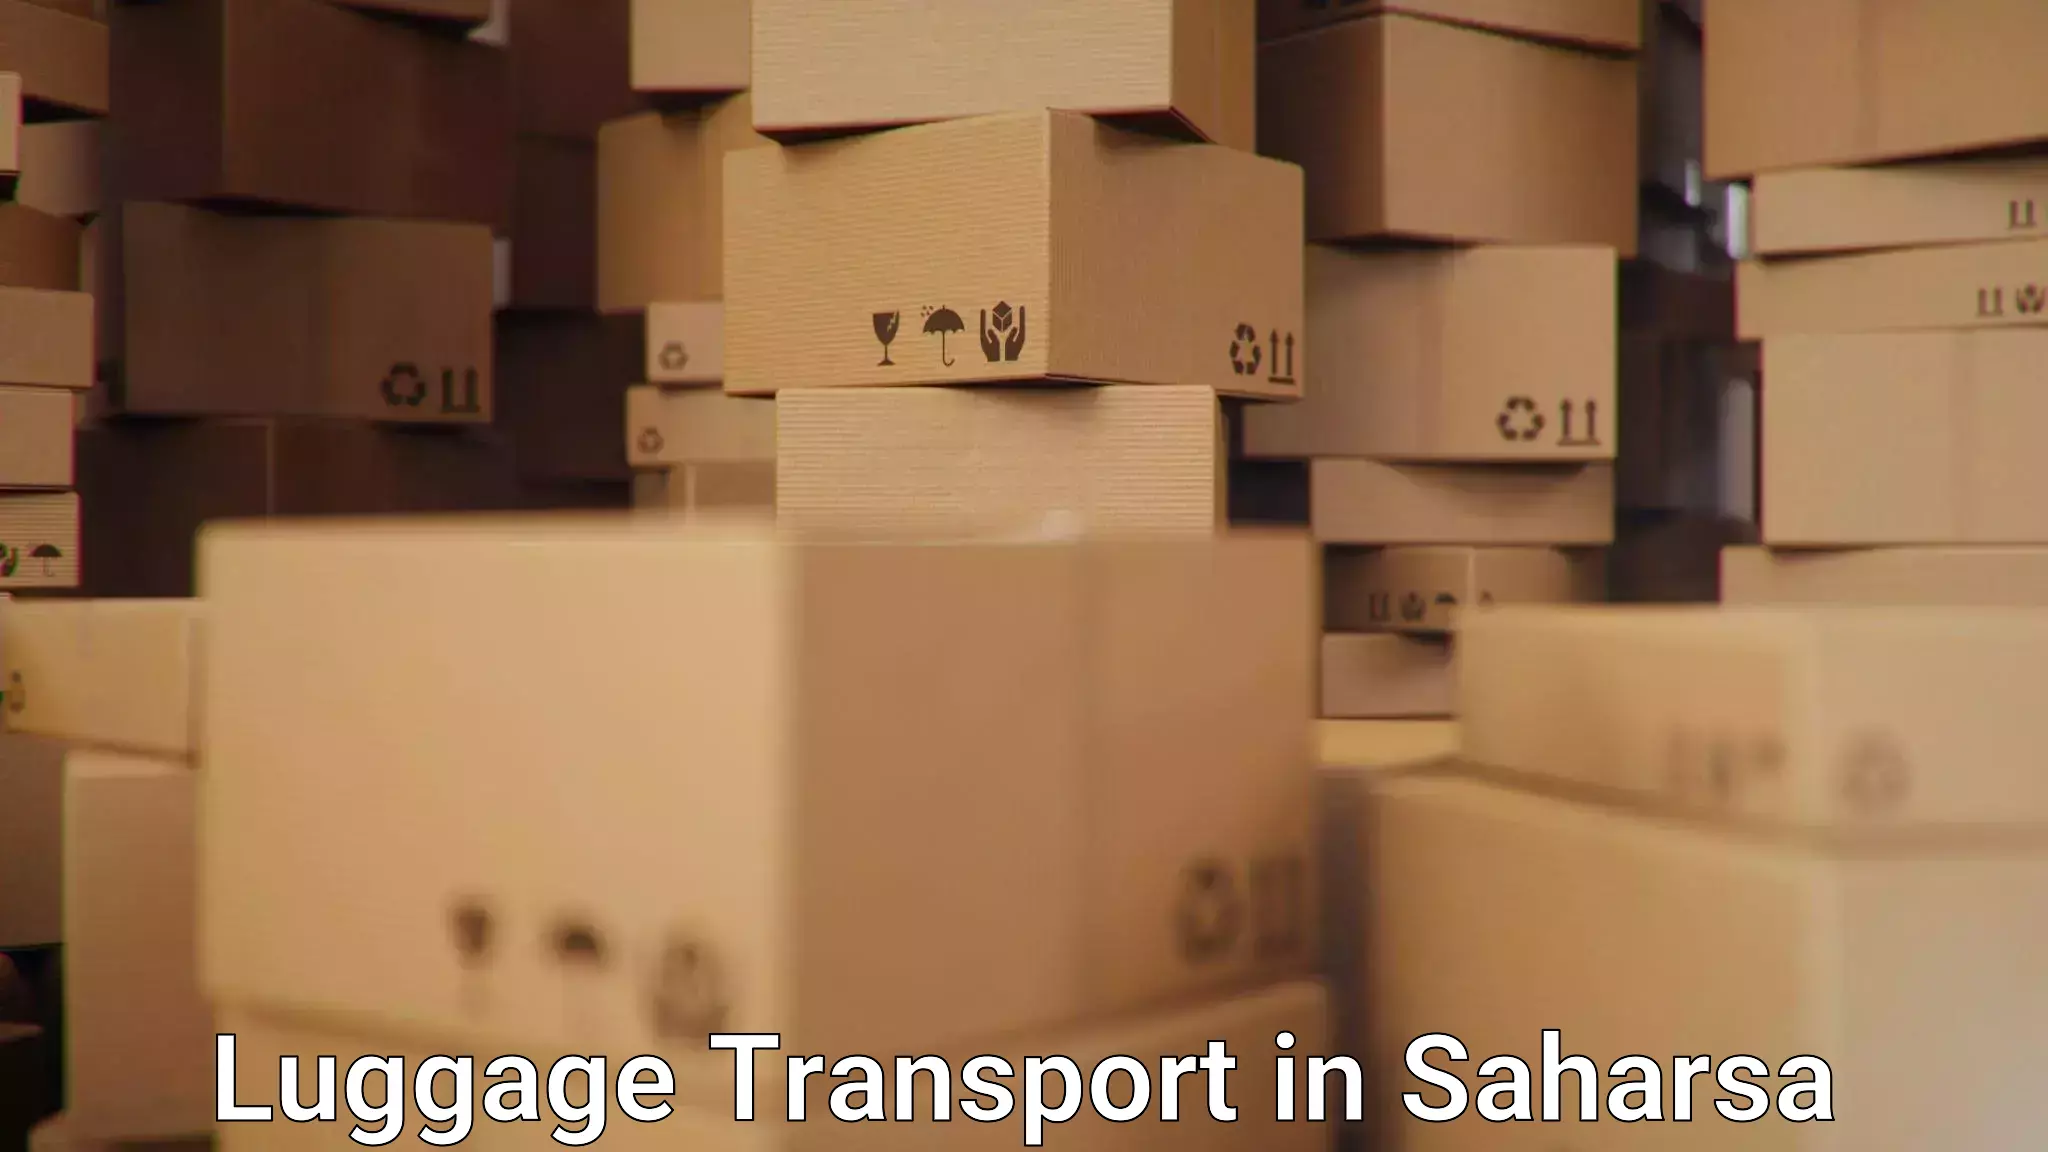 Holiday baggage shipping in Saharsa